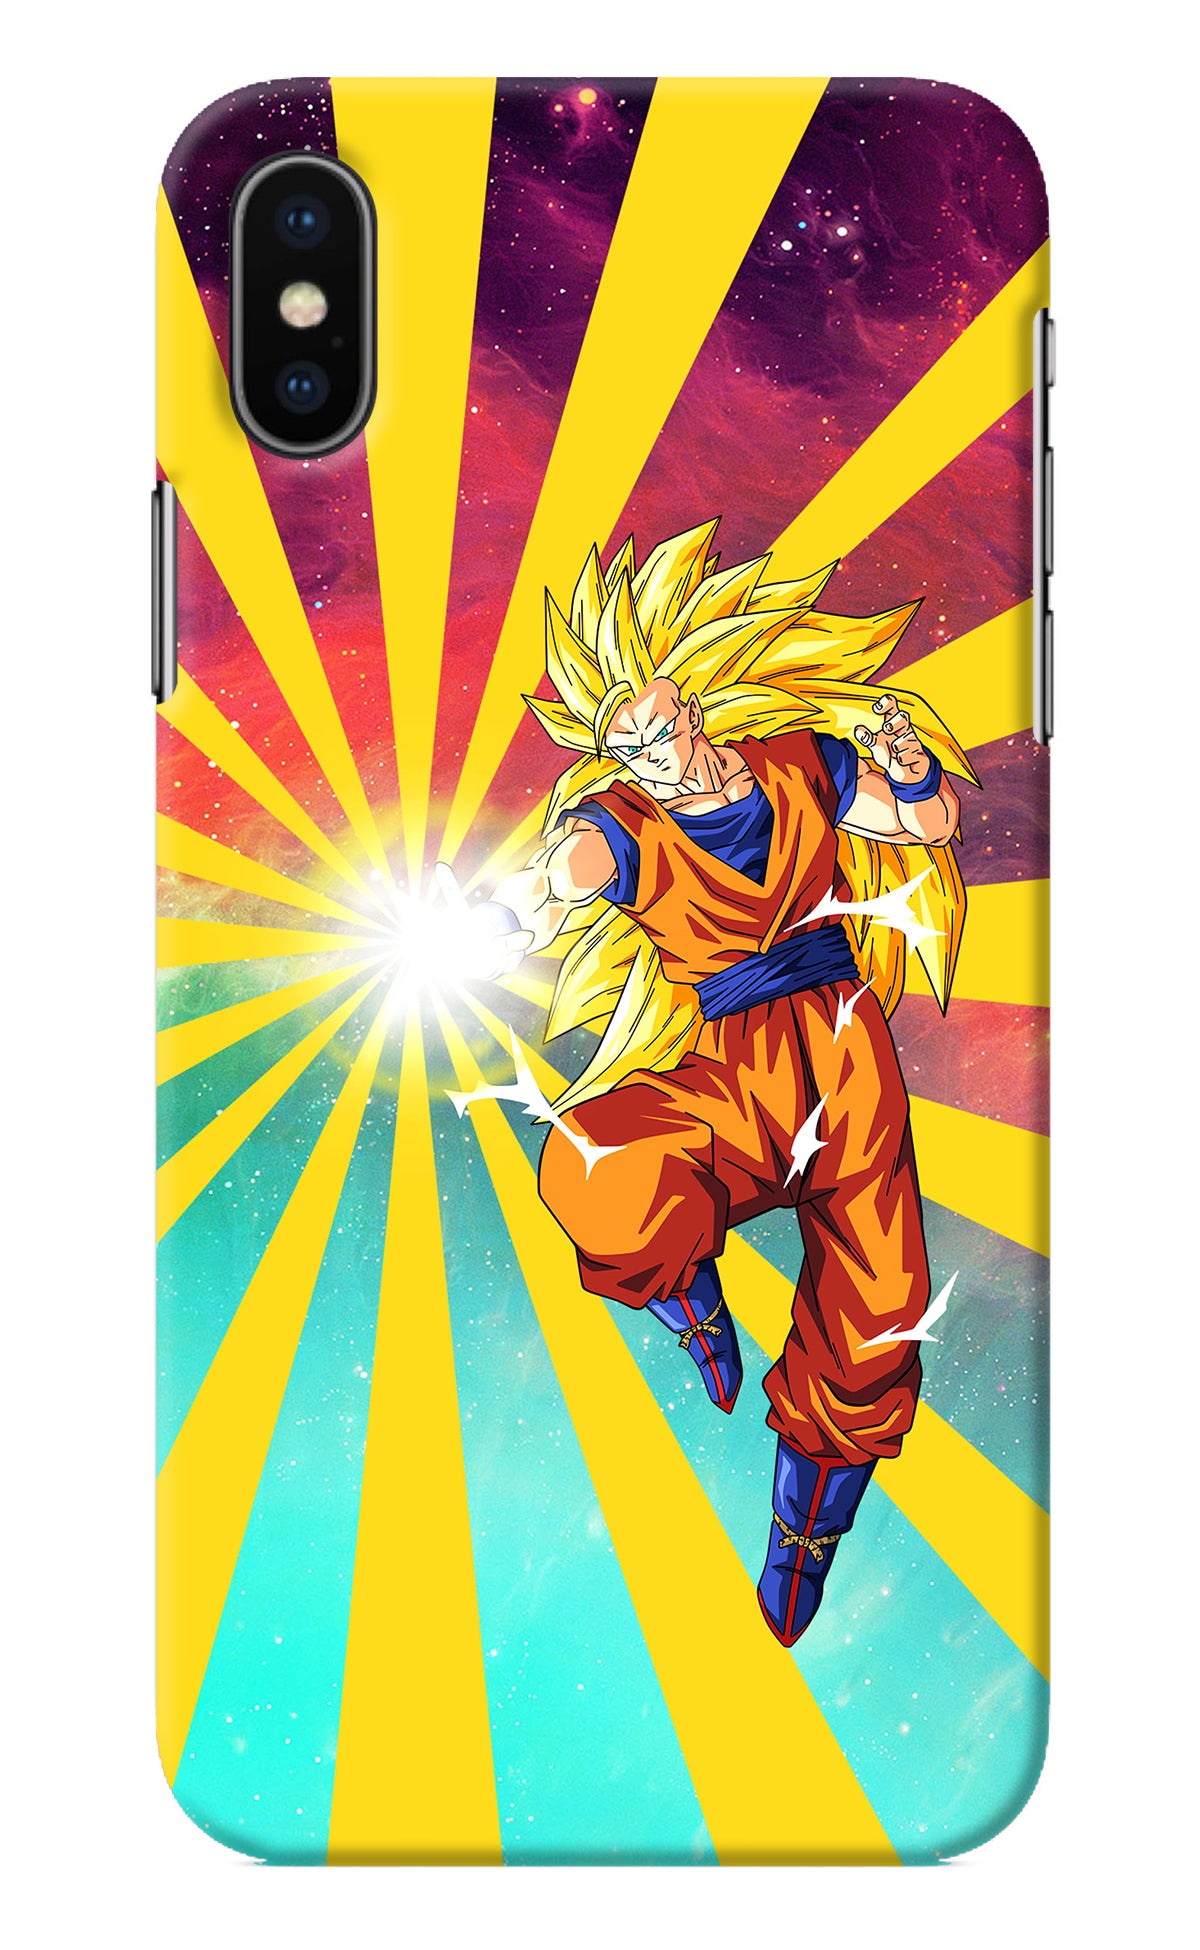 Goku Super Saiyan iPhone X Back Cover